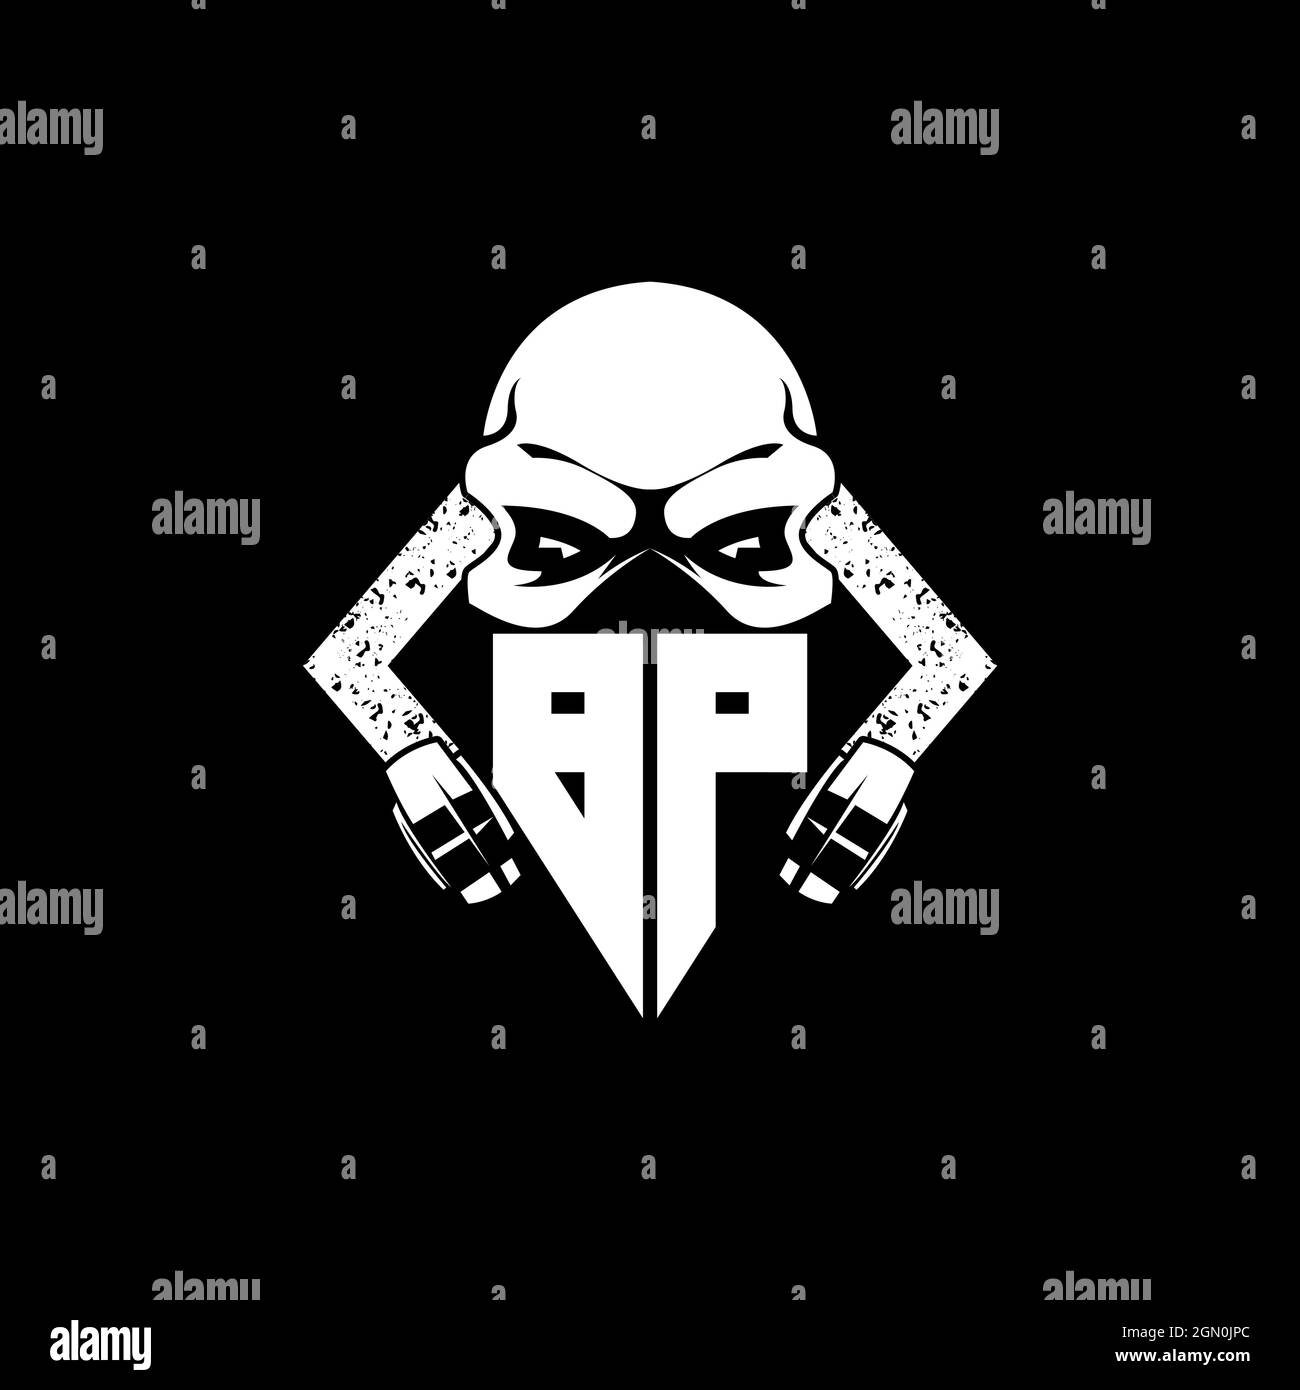 BP Monogram eSport jeu avec Skull Mask forme style Vector Illustration de Vecteur